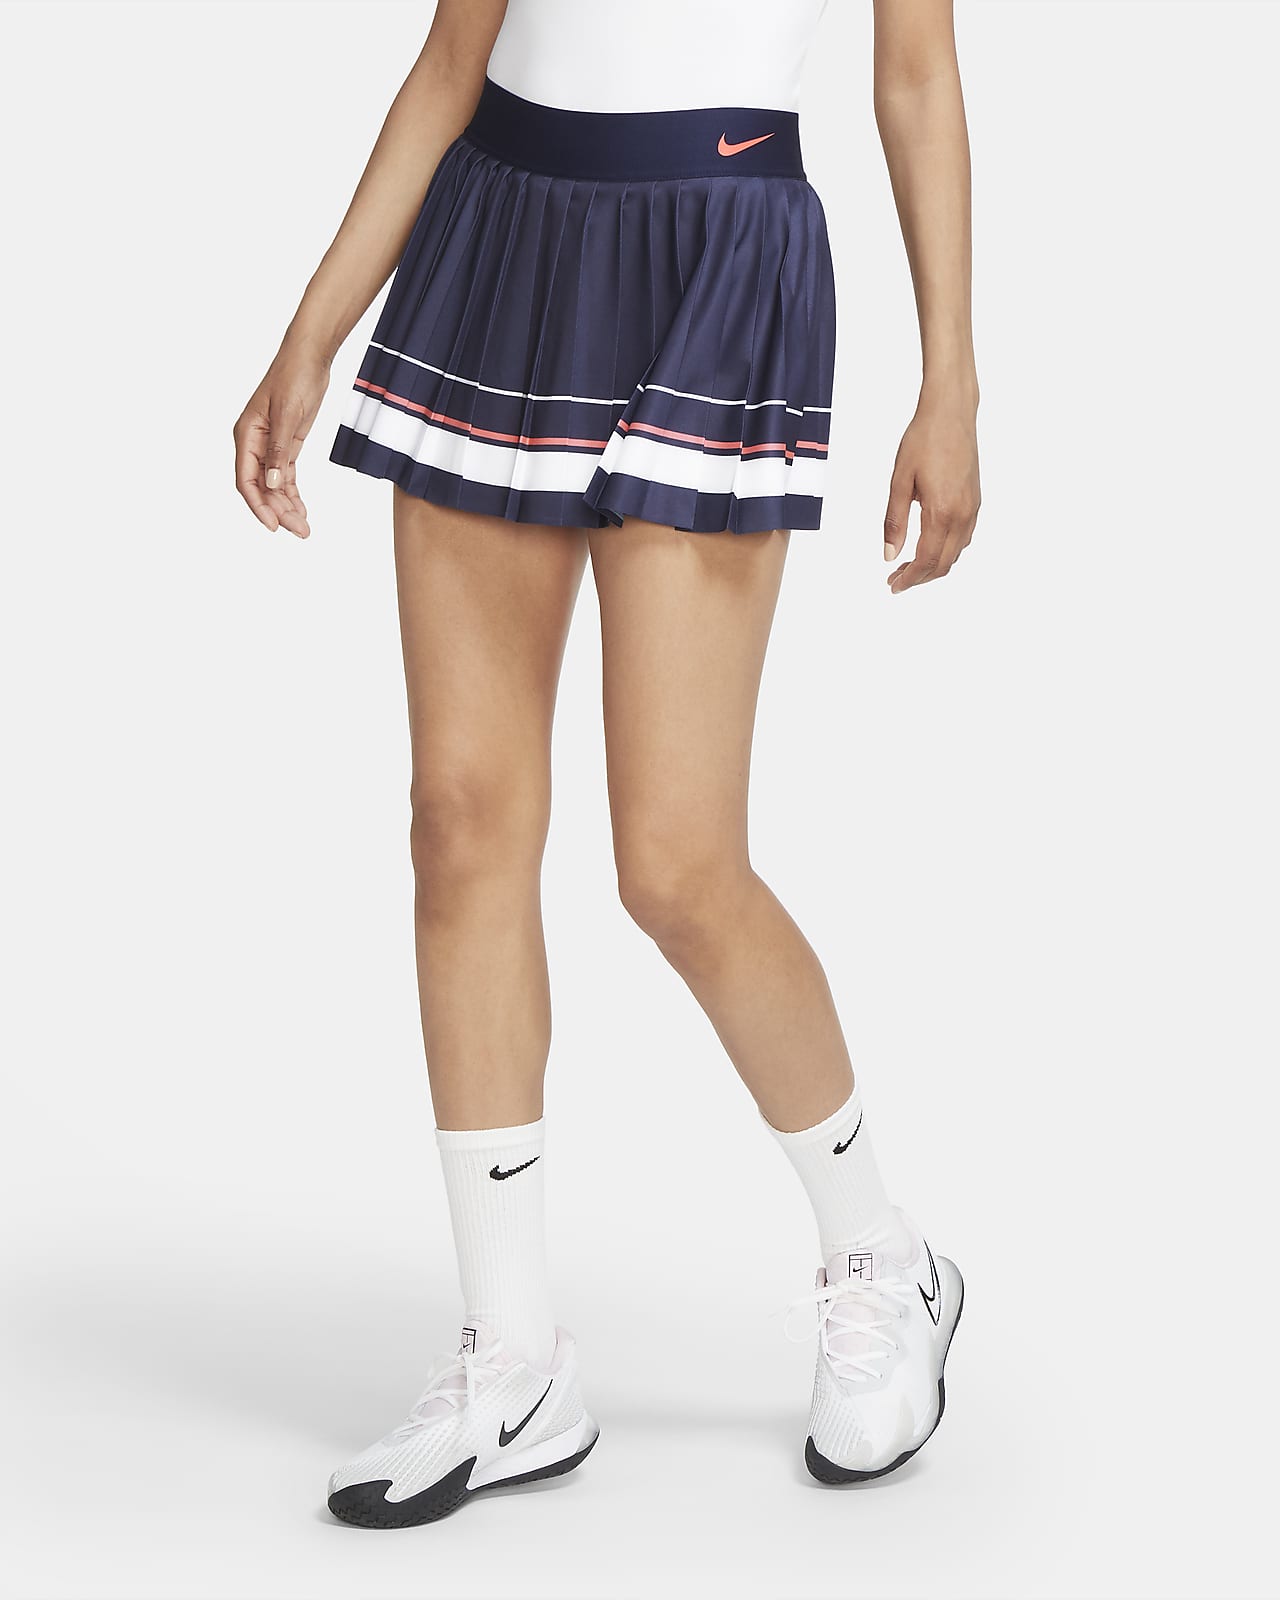 Maria Women's Tennis Skirt. Nike CA